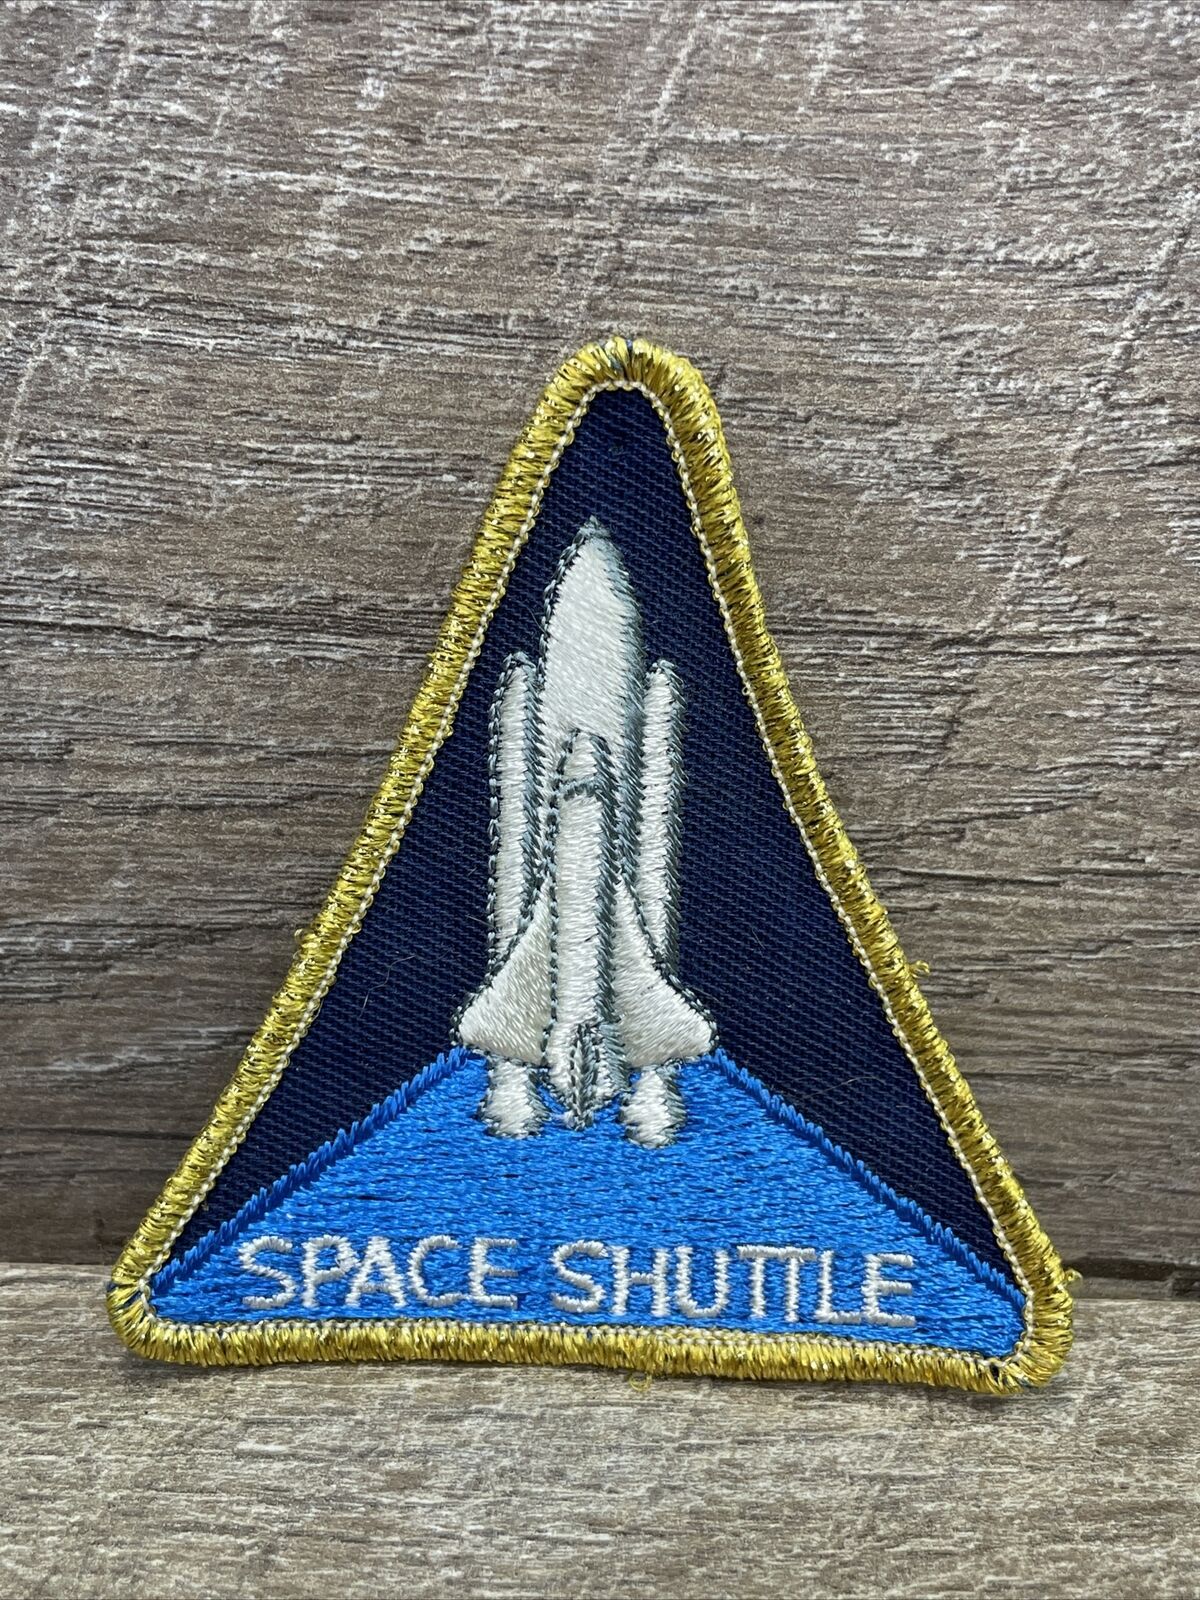 Space Shuttle Challenger 1986 Jacket Patch Badge NASA Cape Canaveral FL Vintage